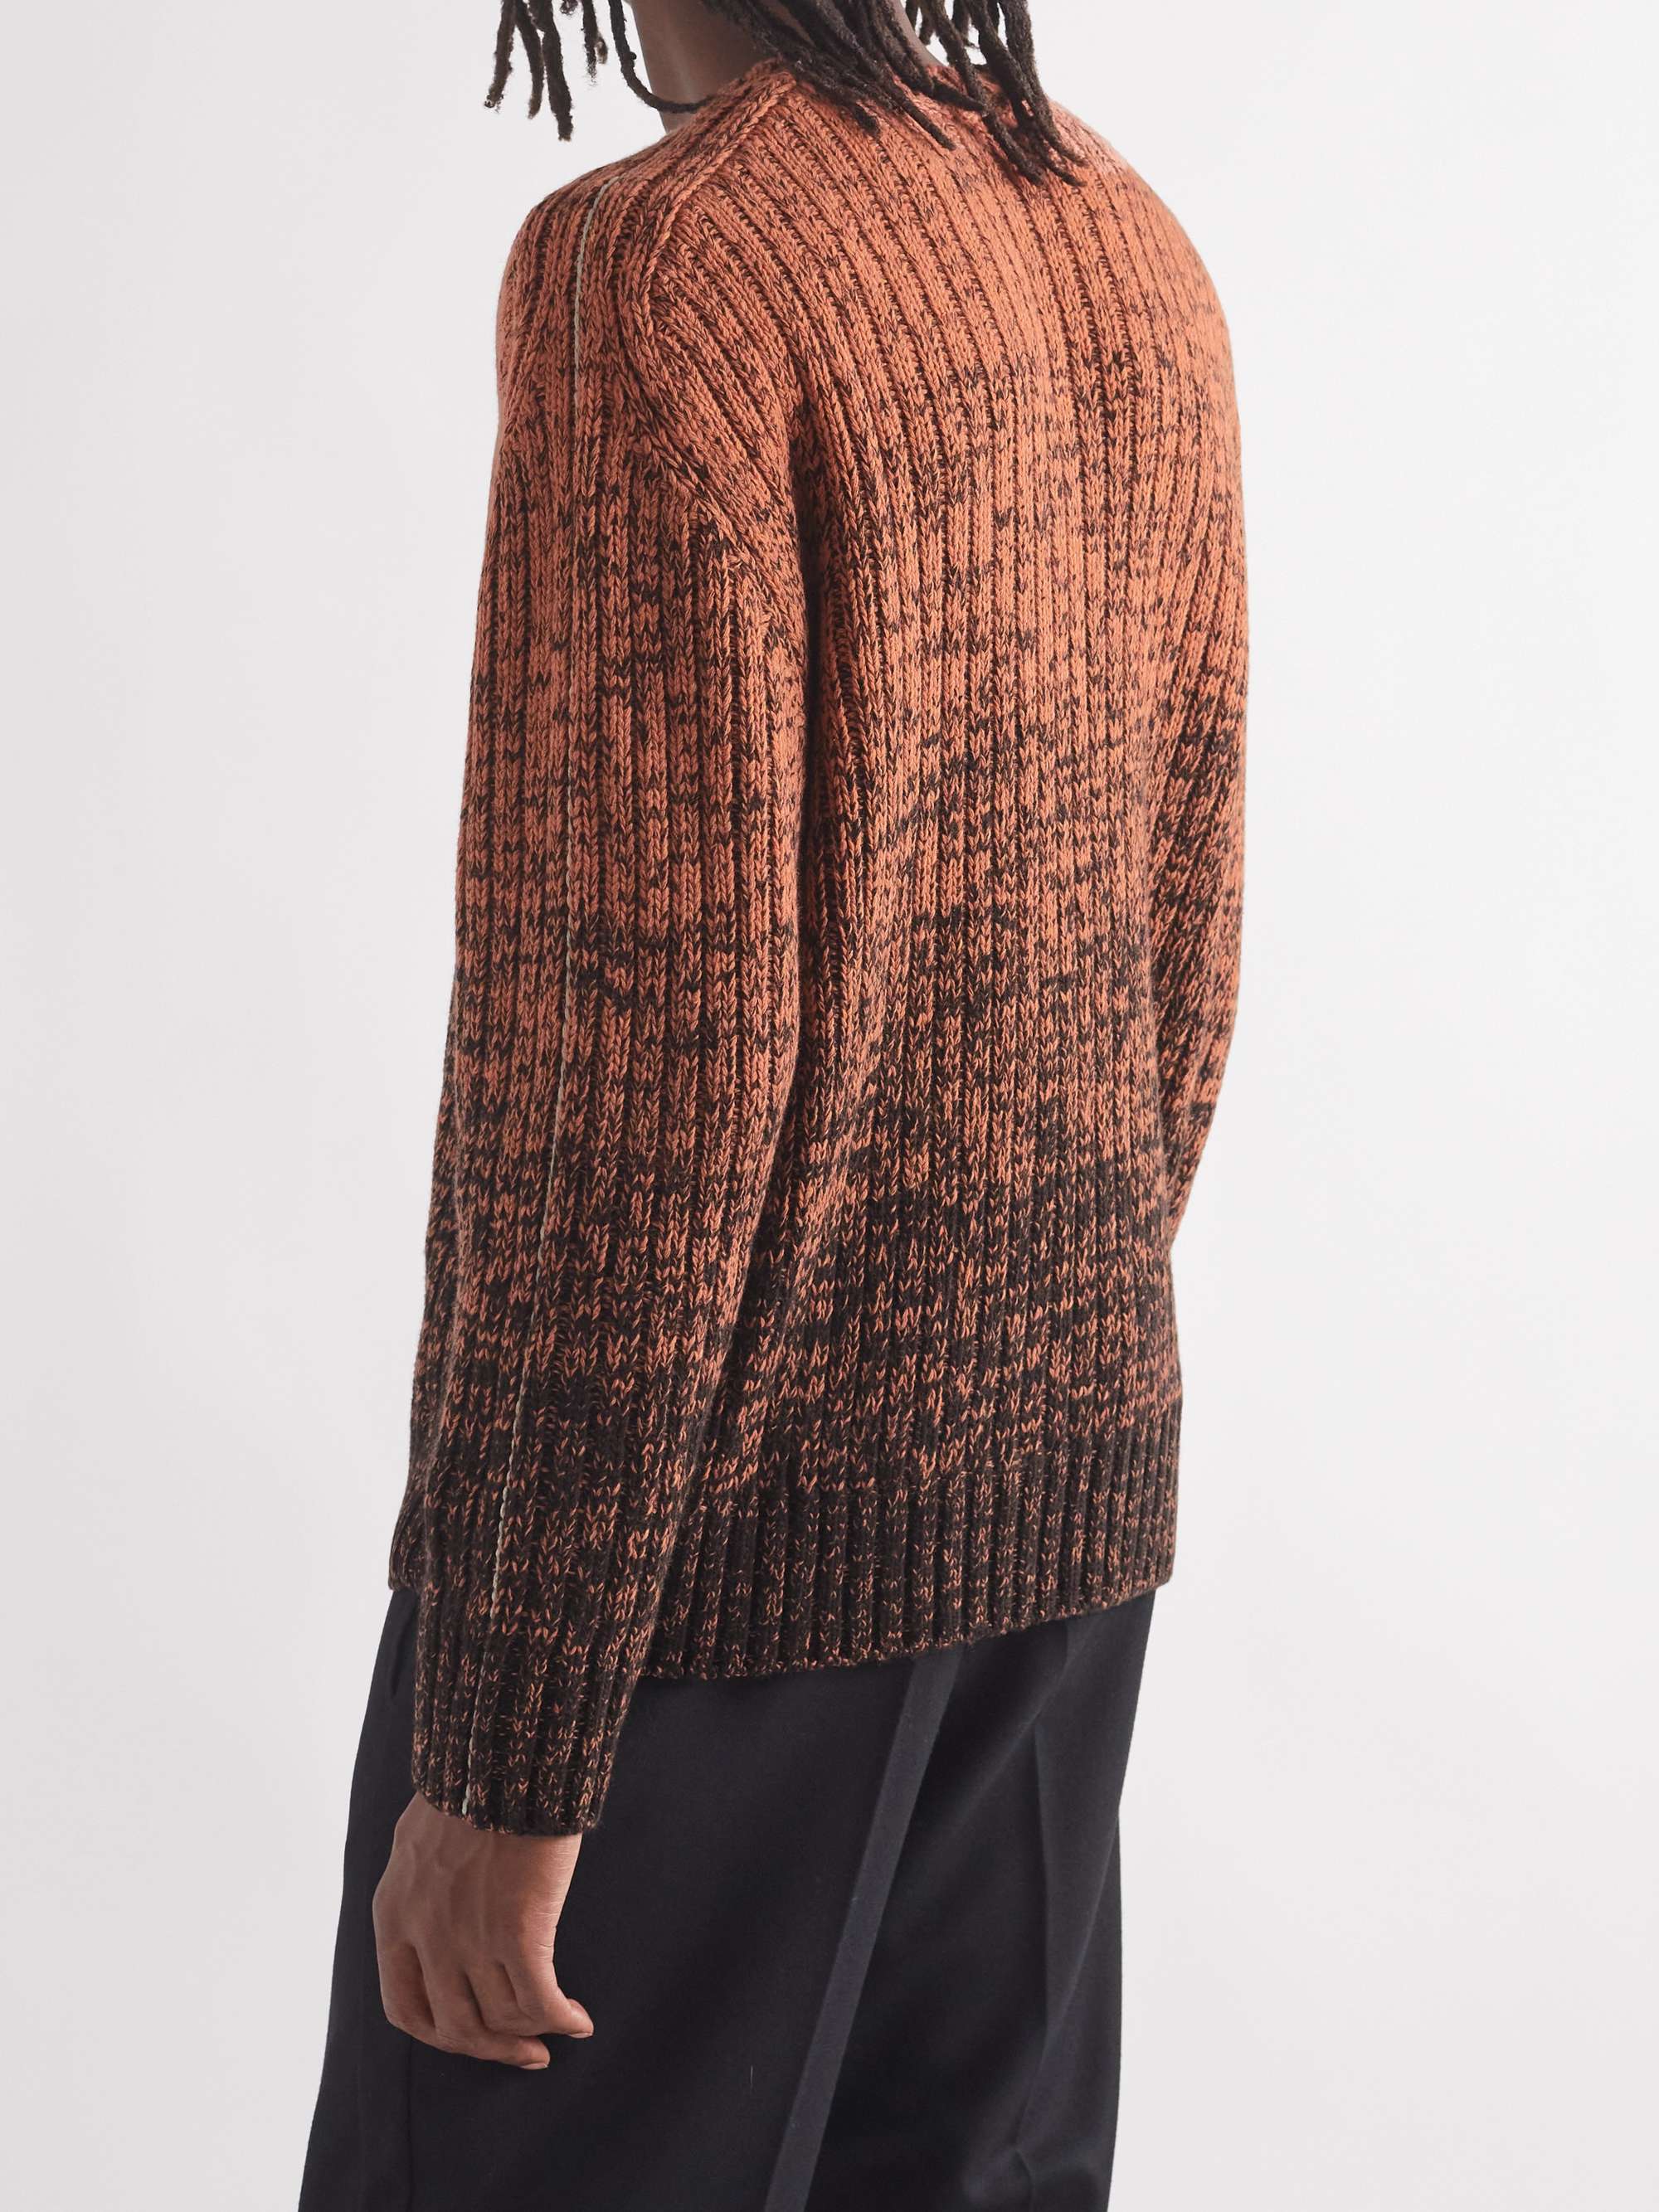 MR P. Dégradé Crocheted Cashmere and Wool-Blend Sweater for Men | MR PORTER